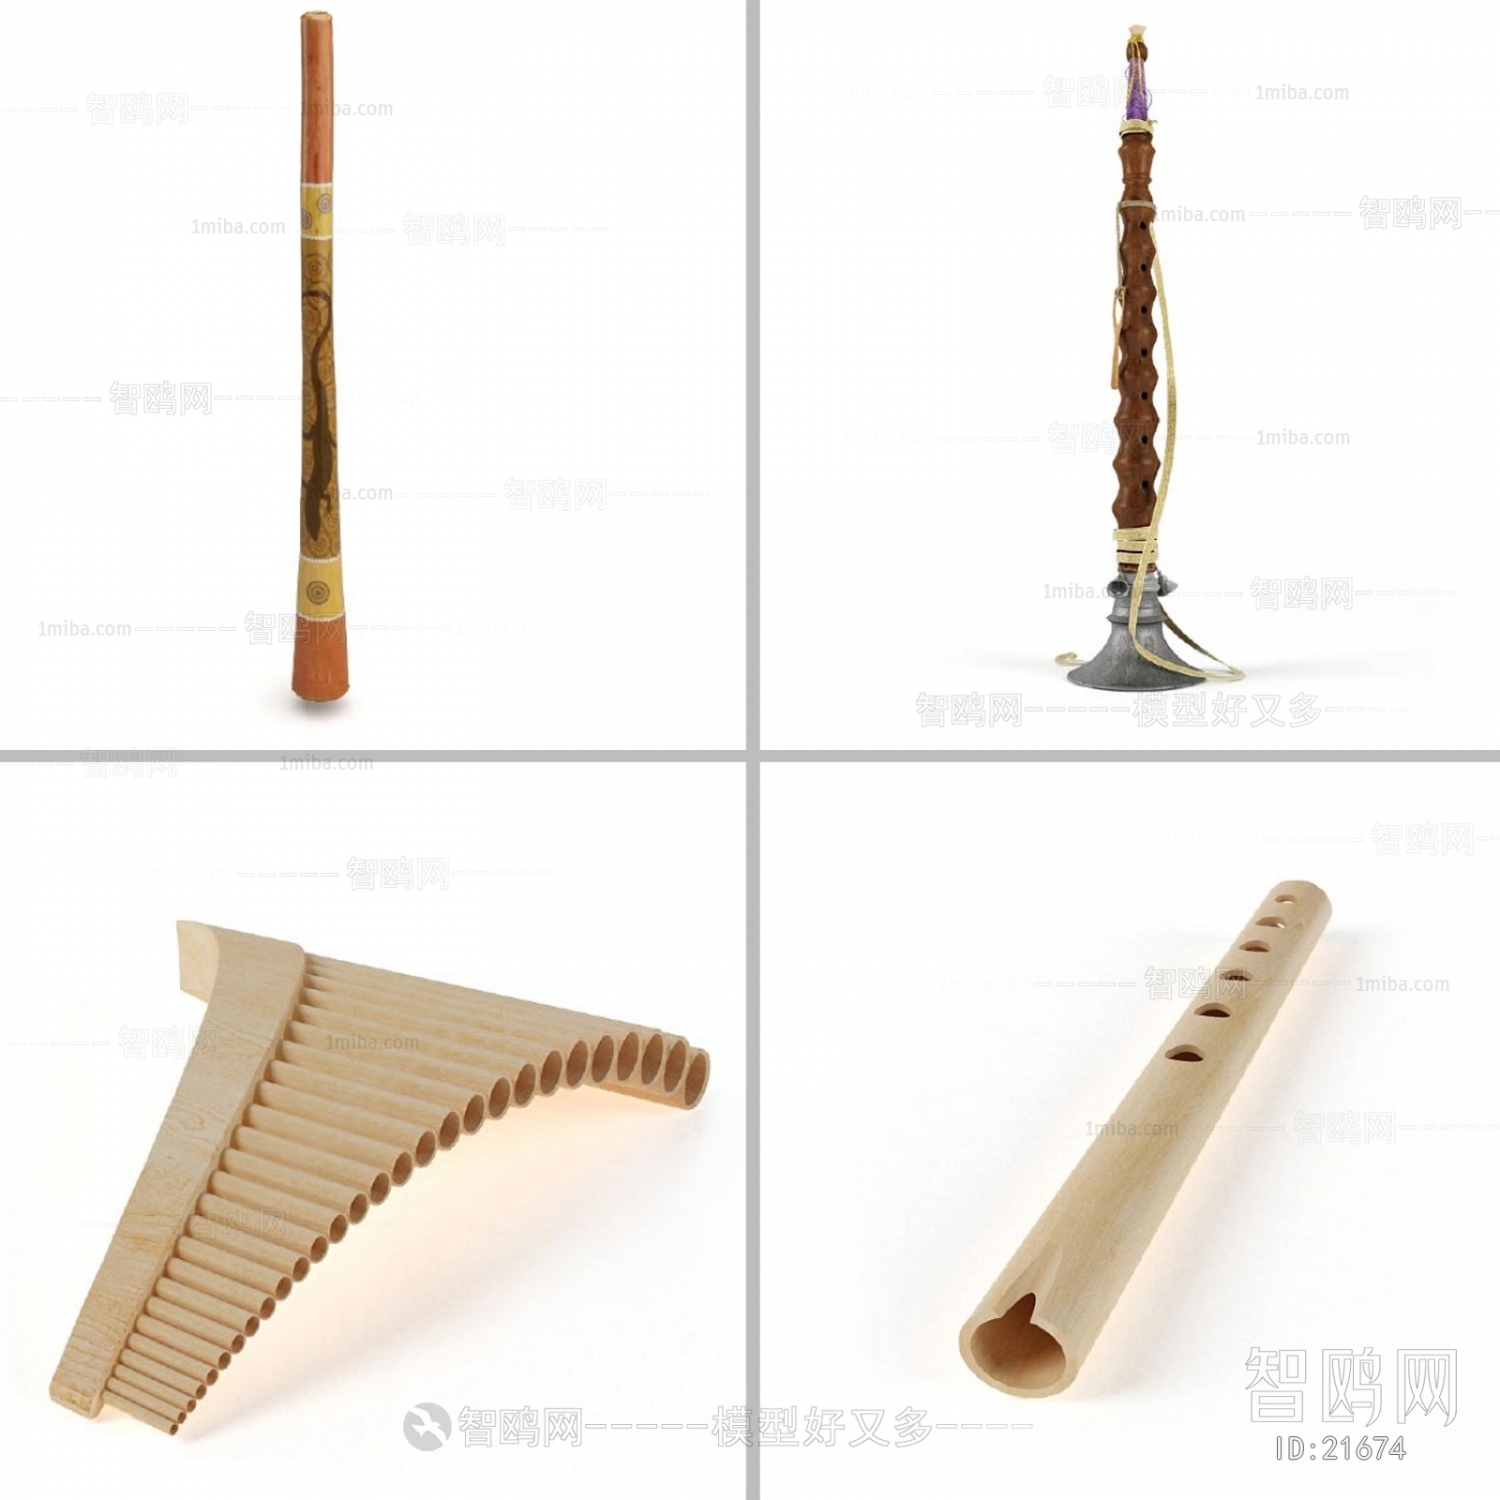 Modern Musical Instrument/Easel